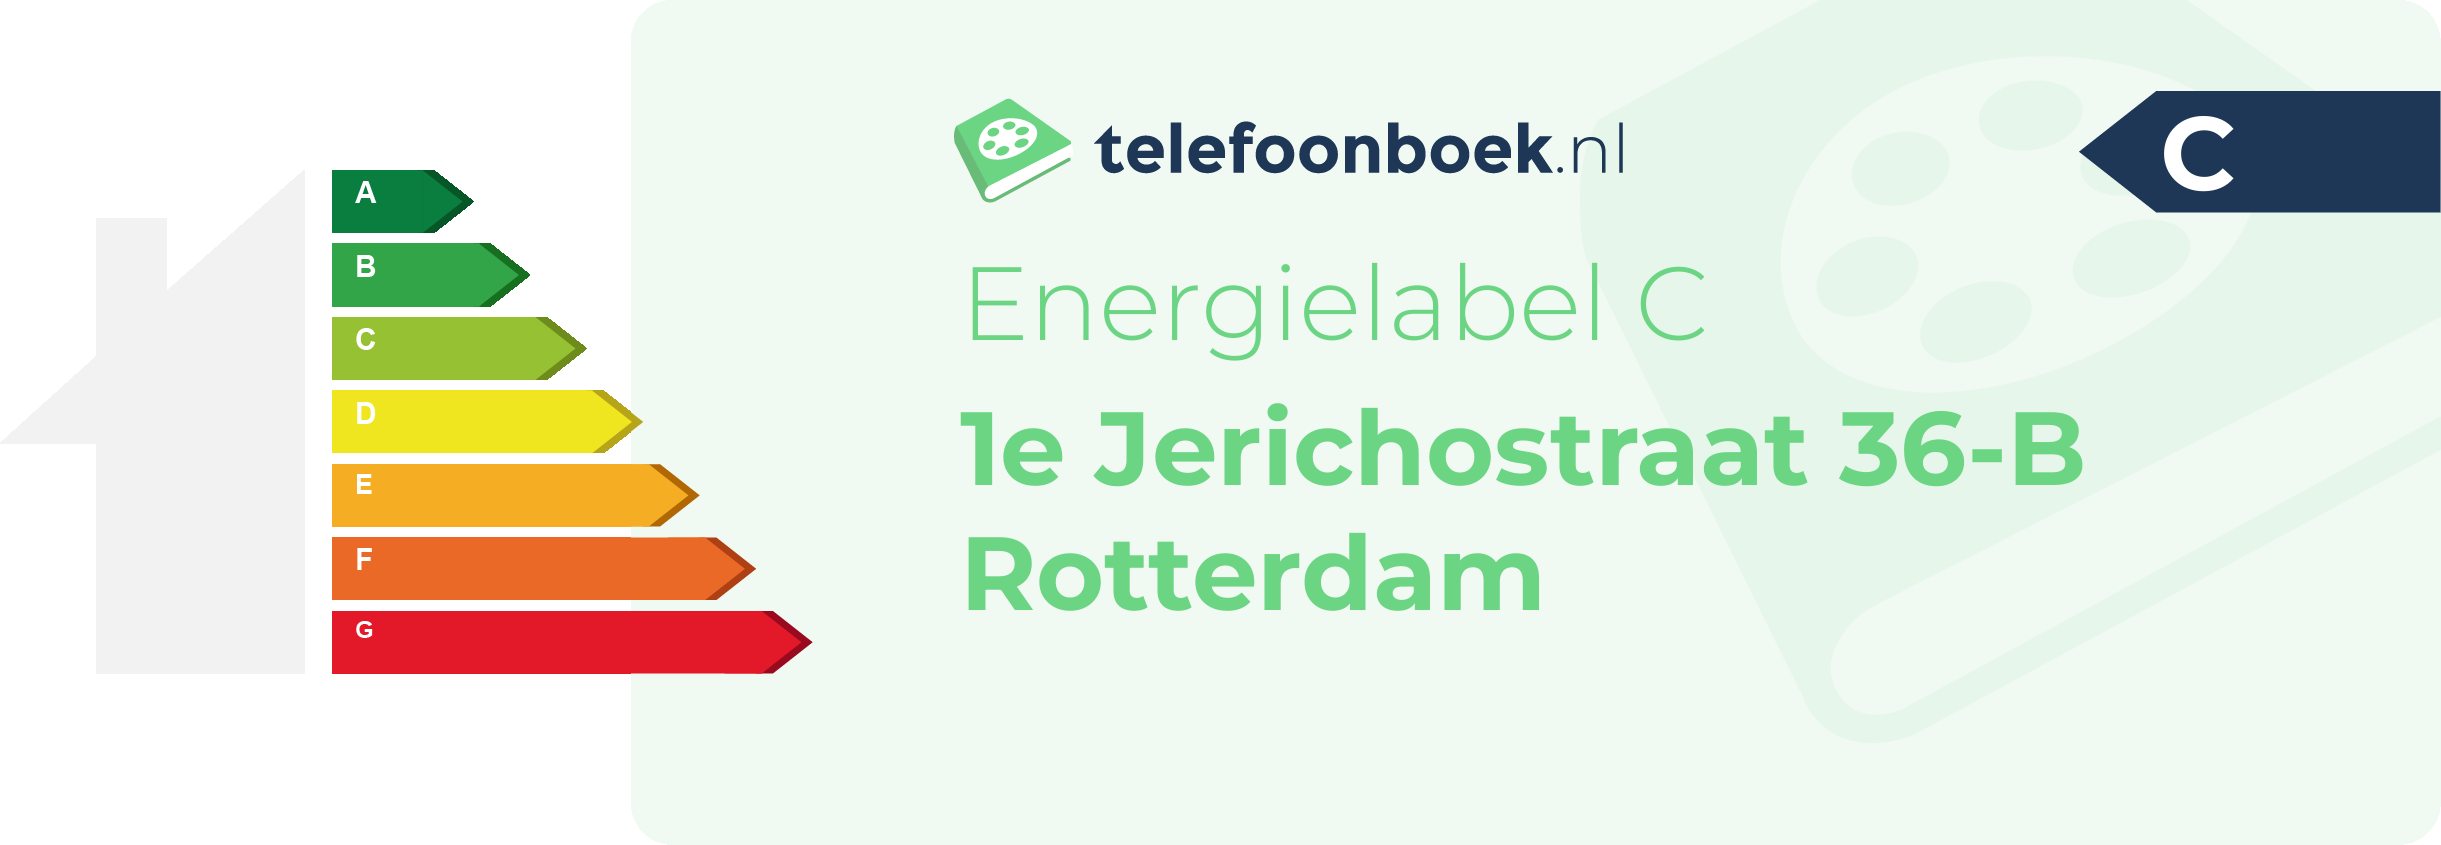 Energielabel 1e Jerichostraat 36-B Rotterdam